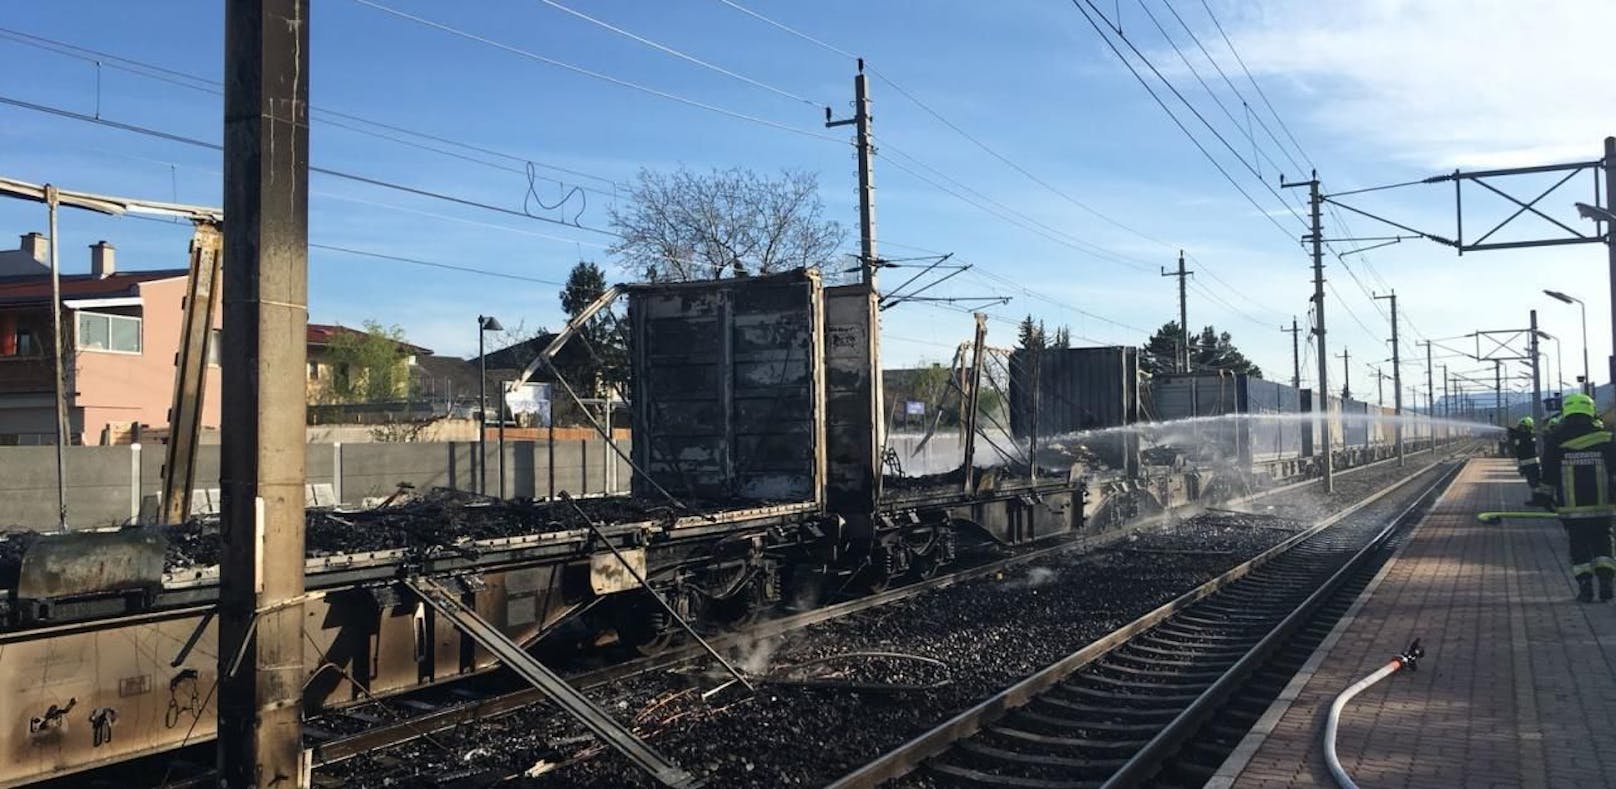 Südbahnstrecke: Drei Güterwaggons brannten völlig aus.